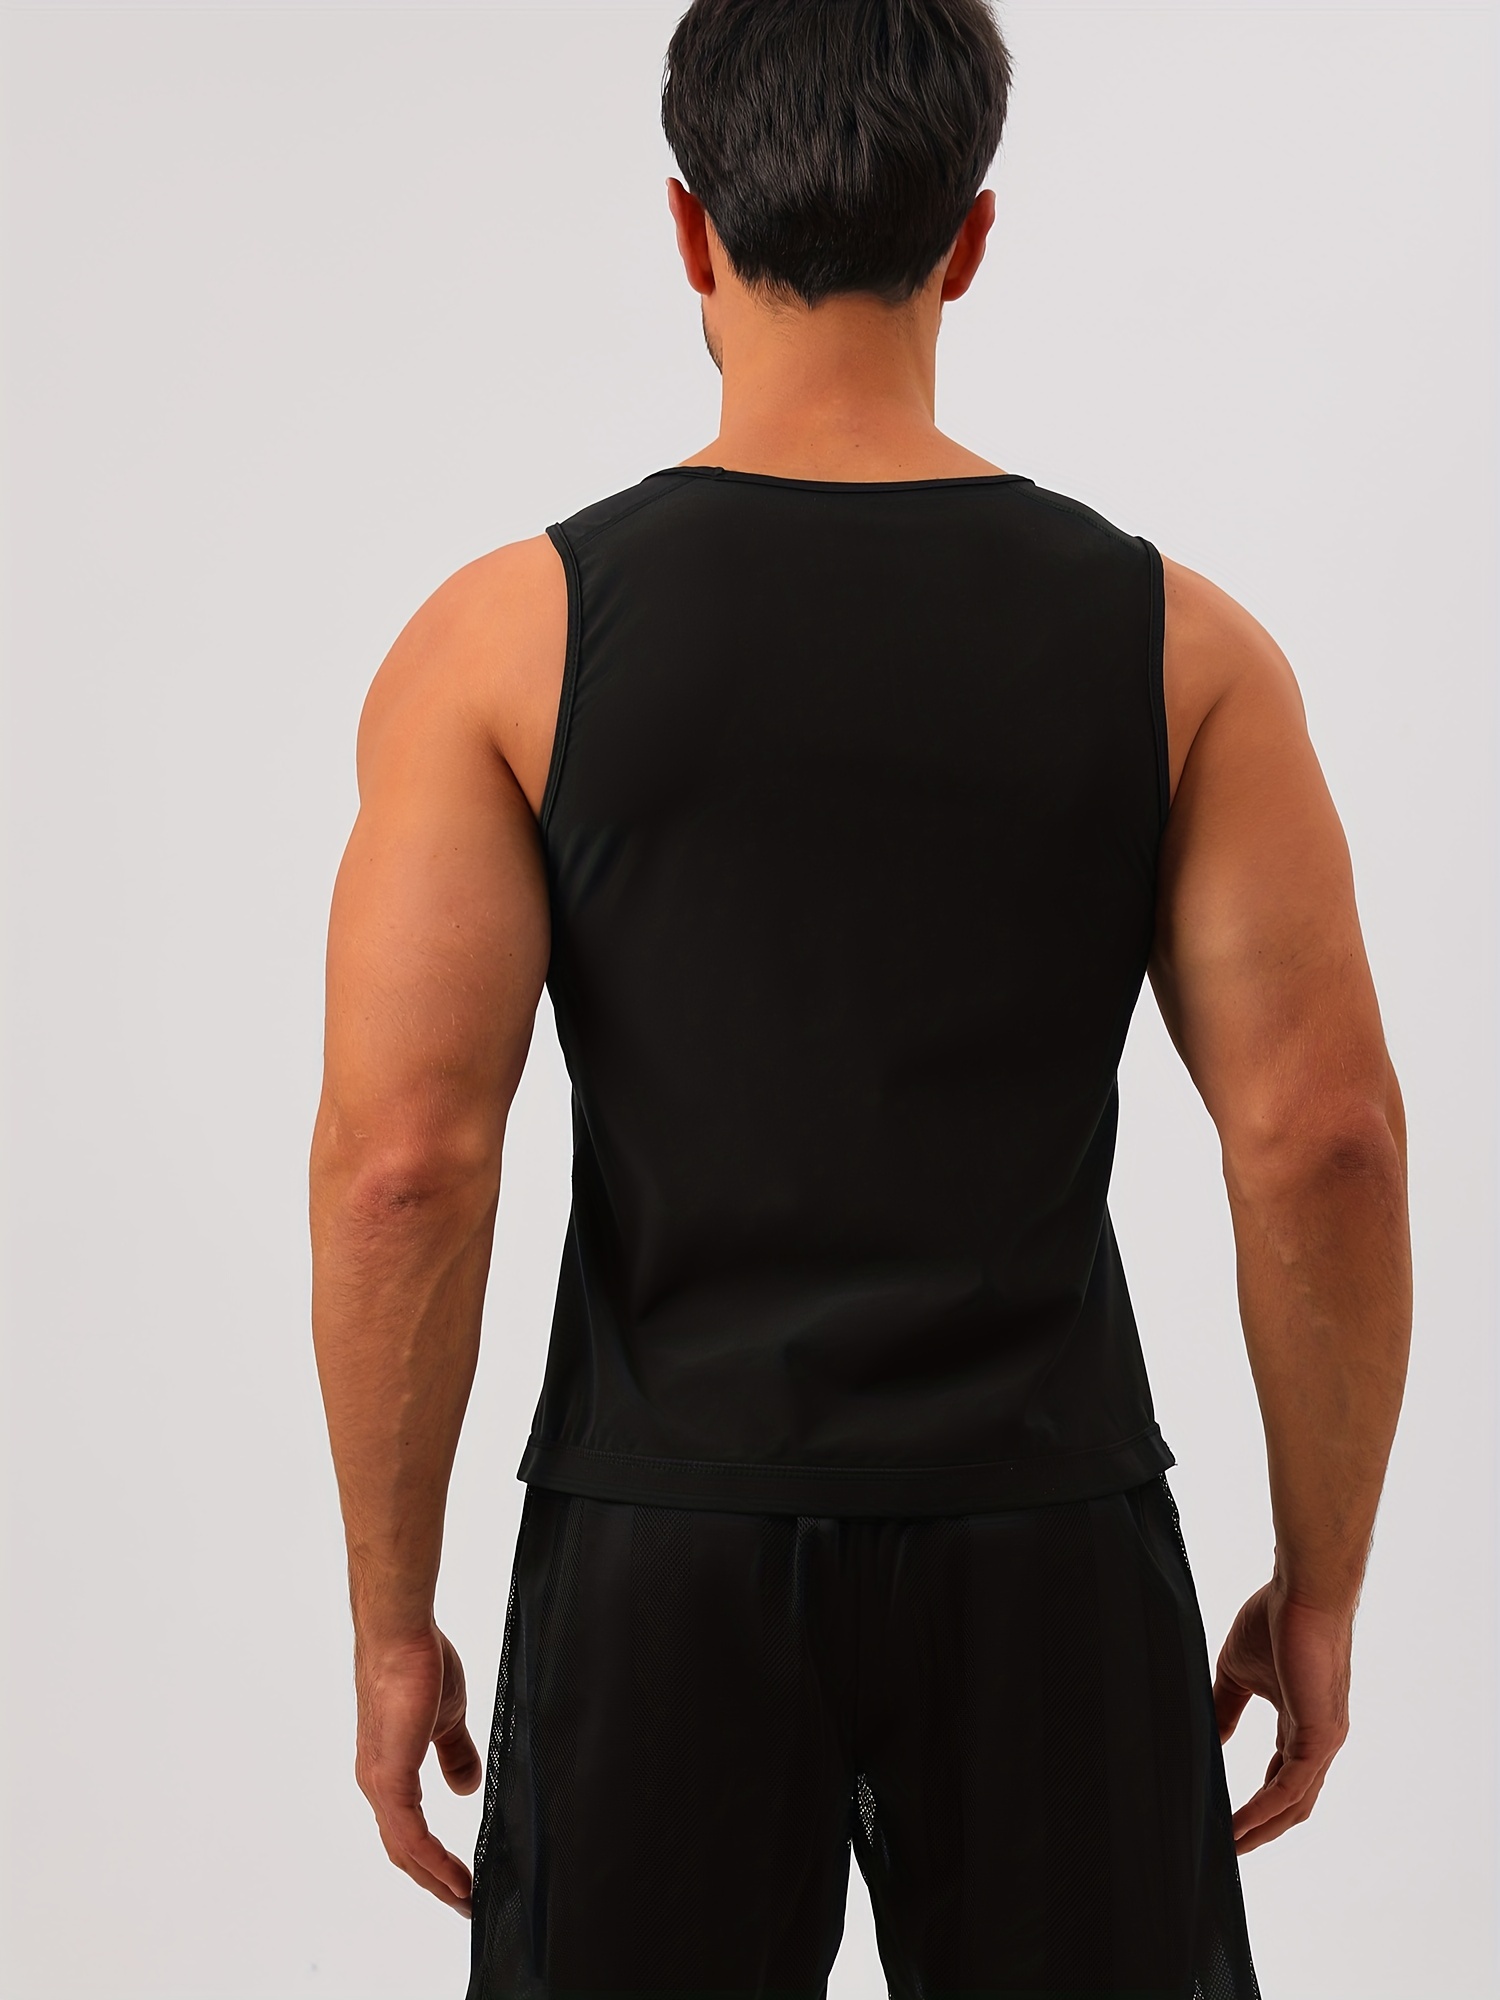 Larry&Marry Men's Heat Trapping Shirt Sweat Body Shaper Vest